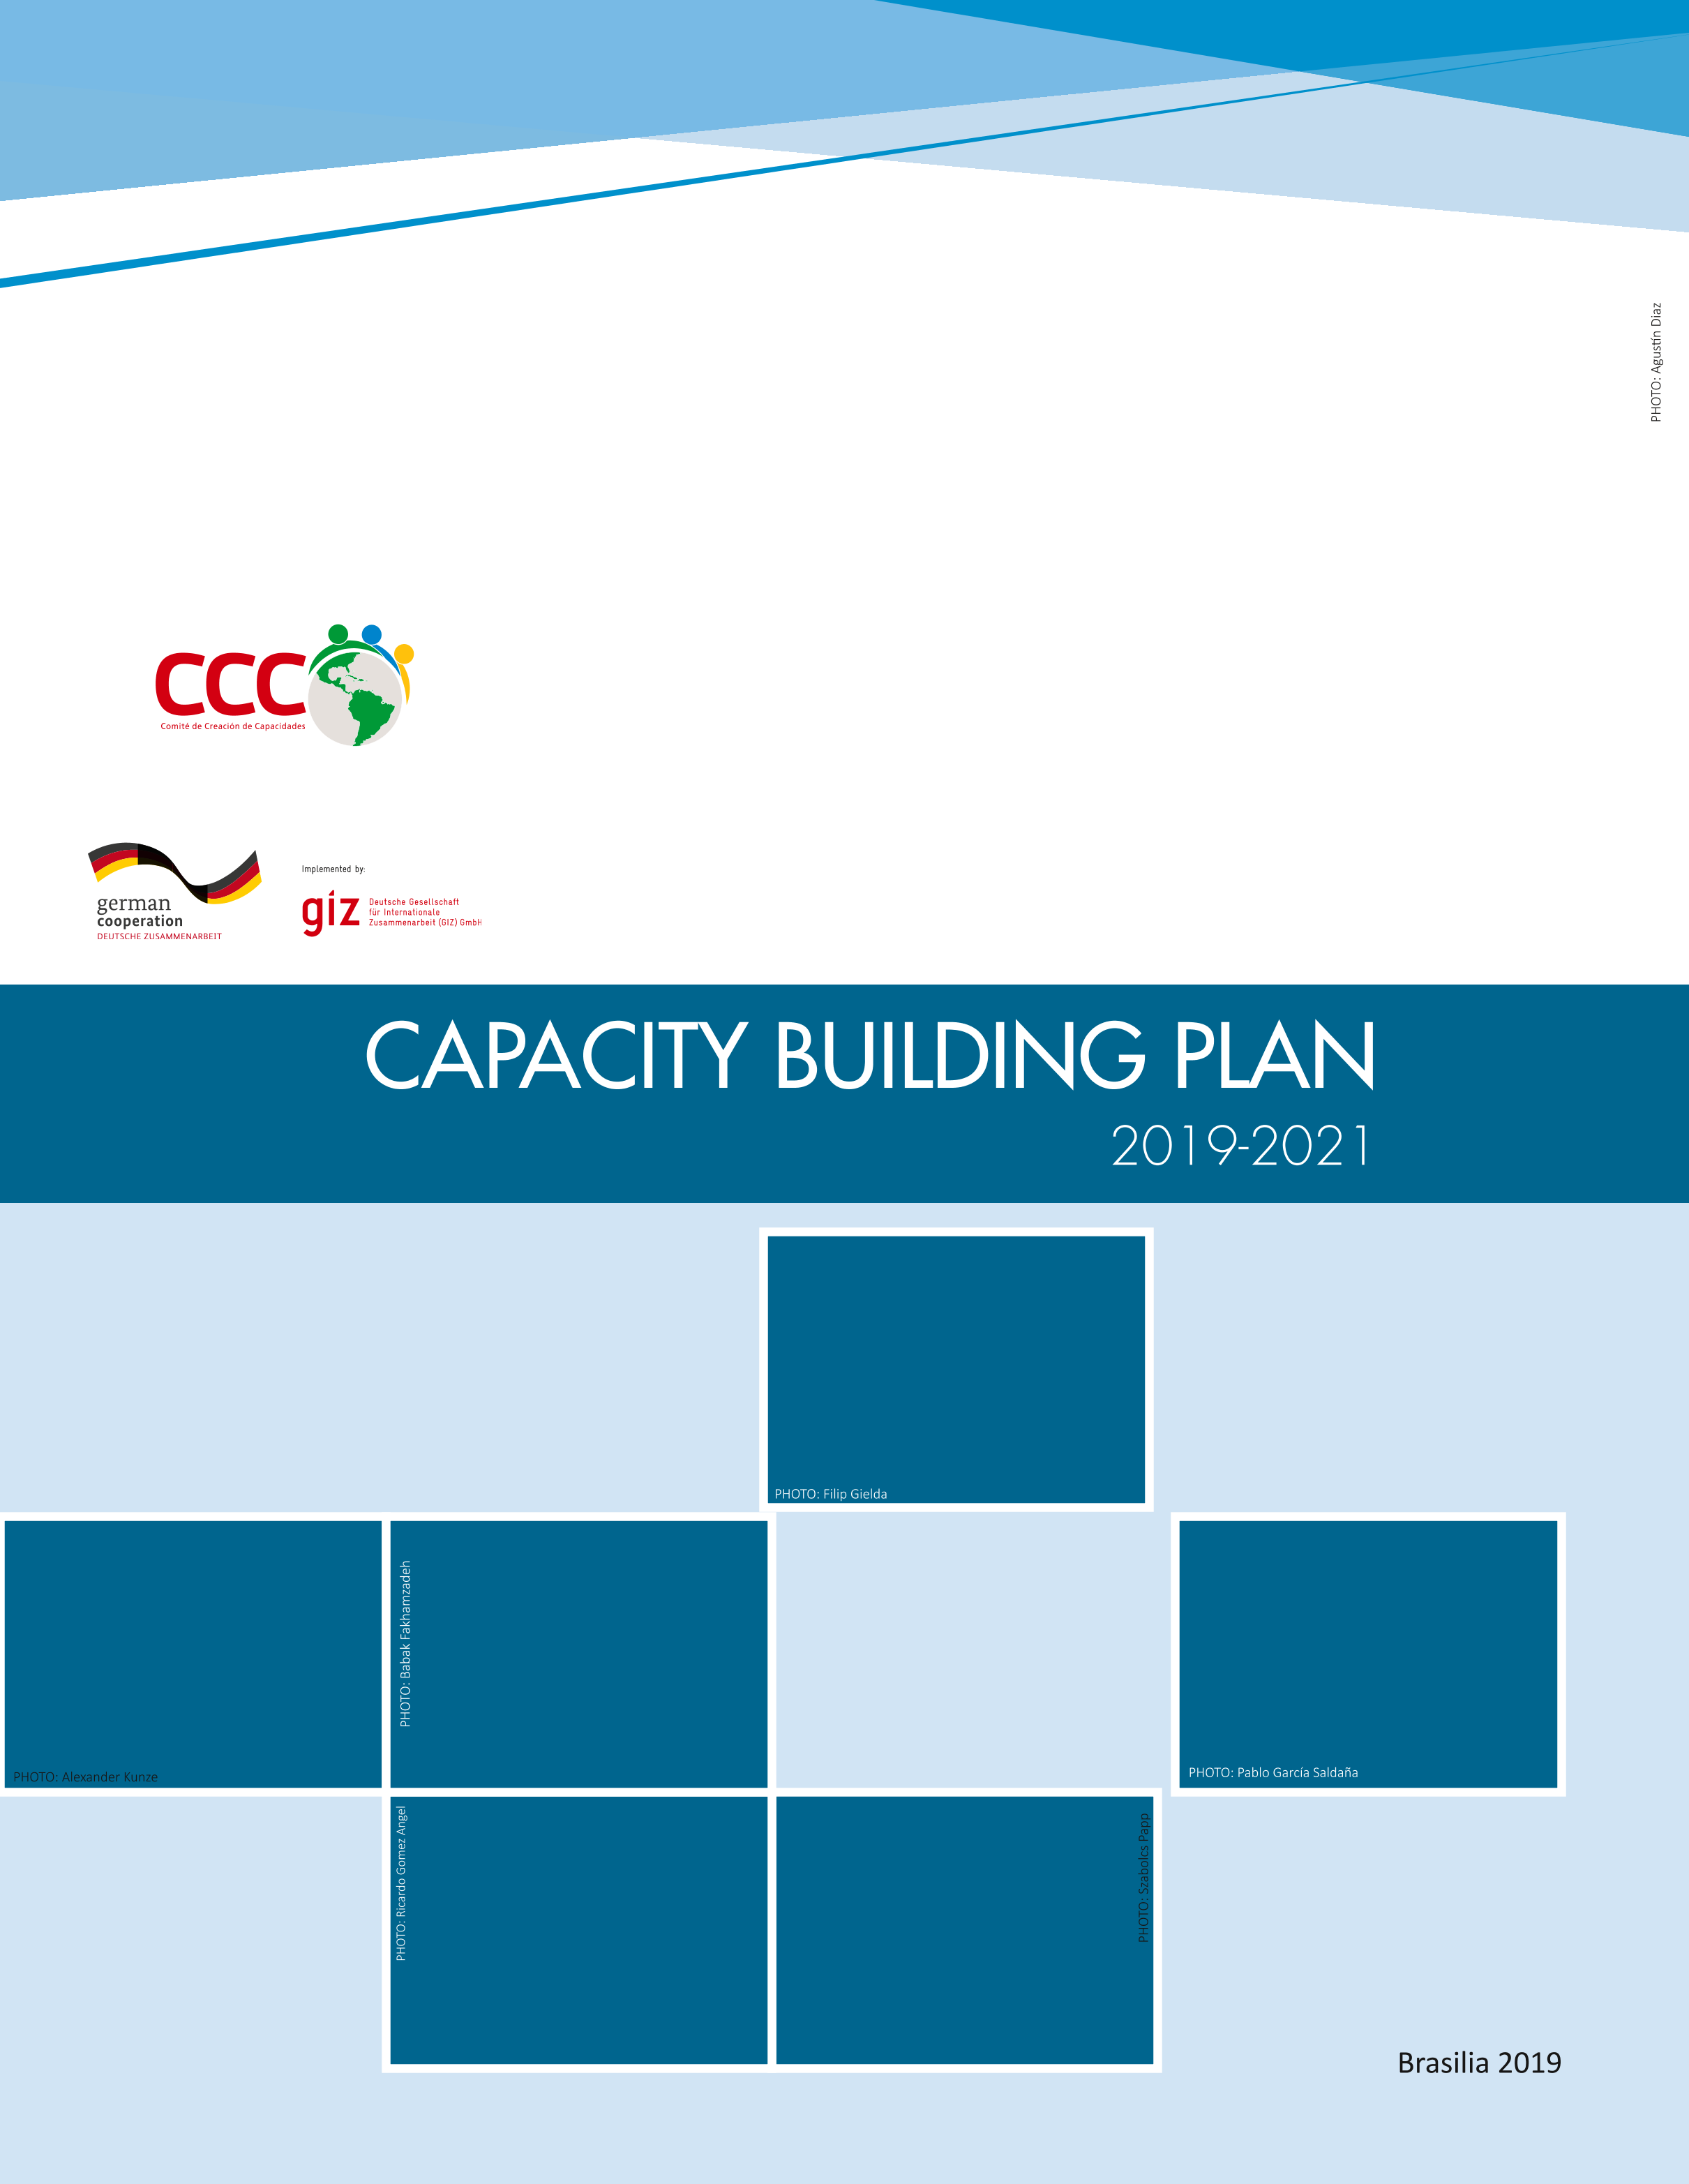 capacity building plan_2019-2021.png